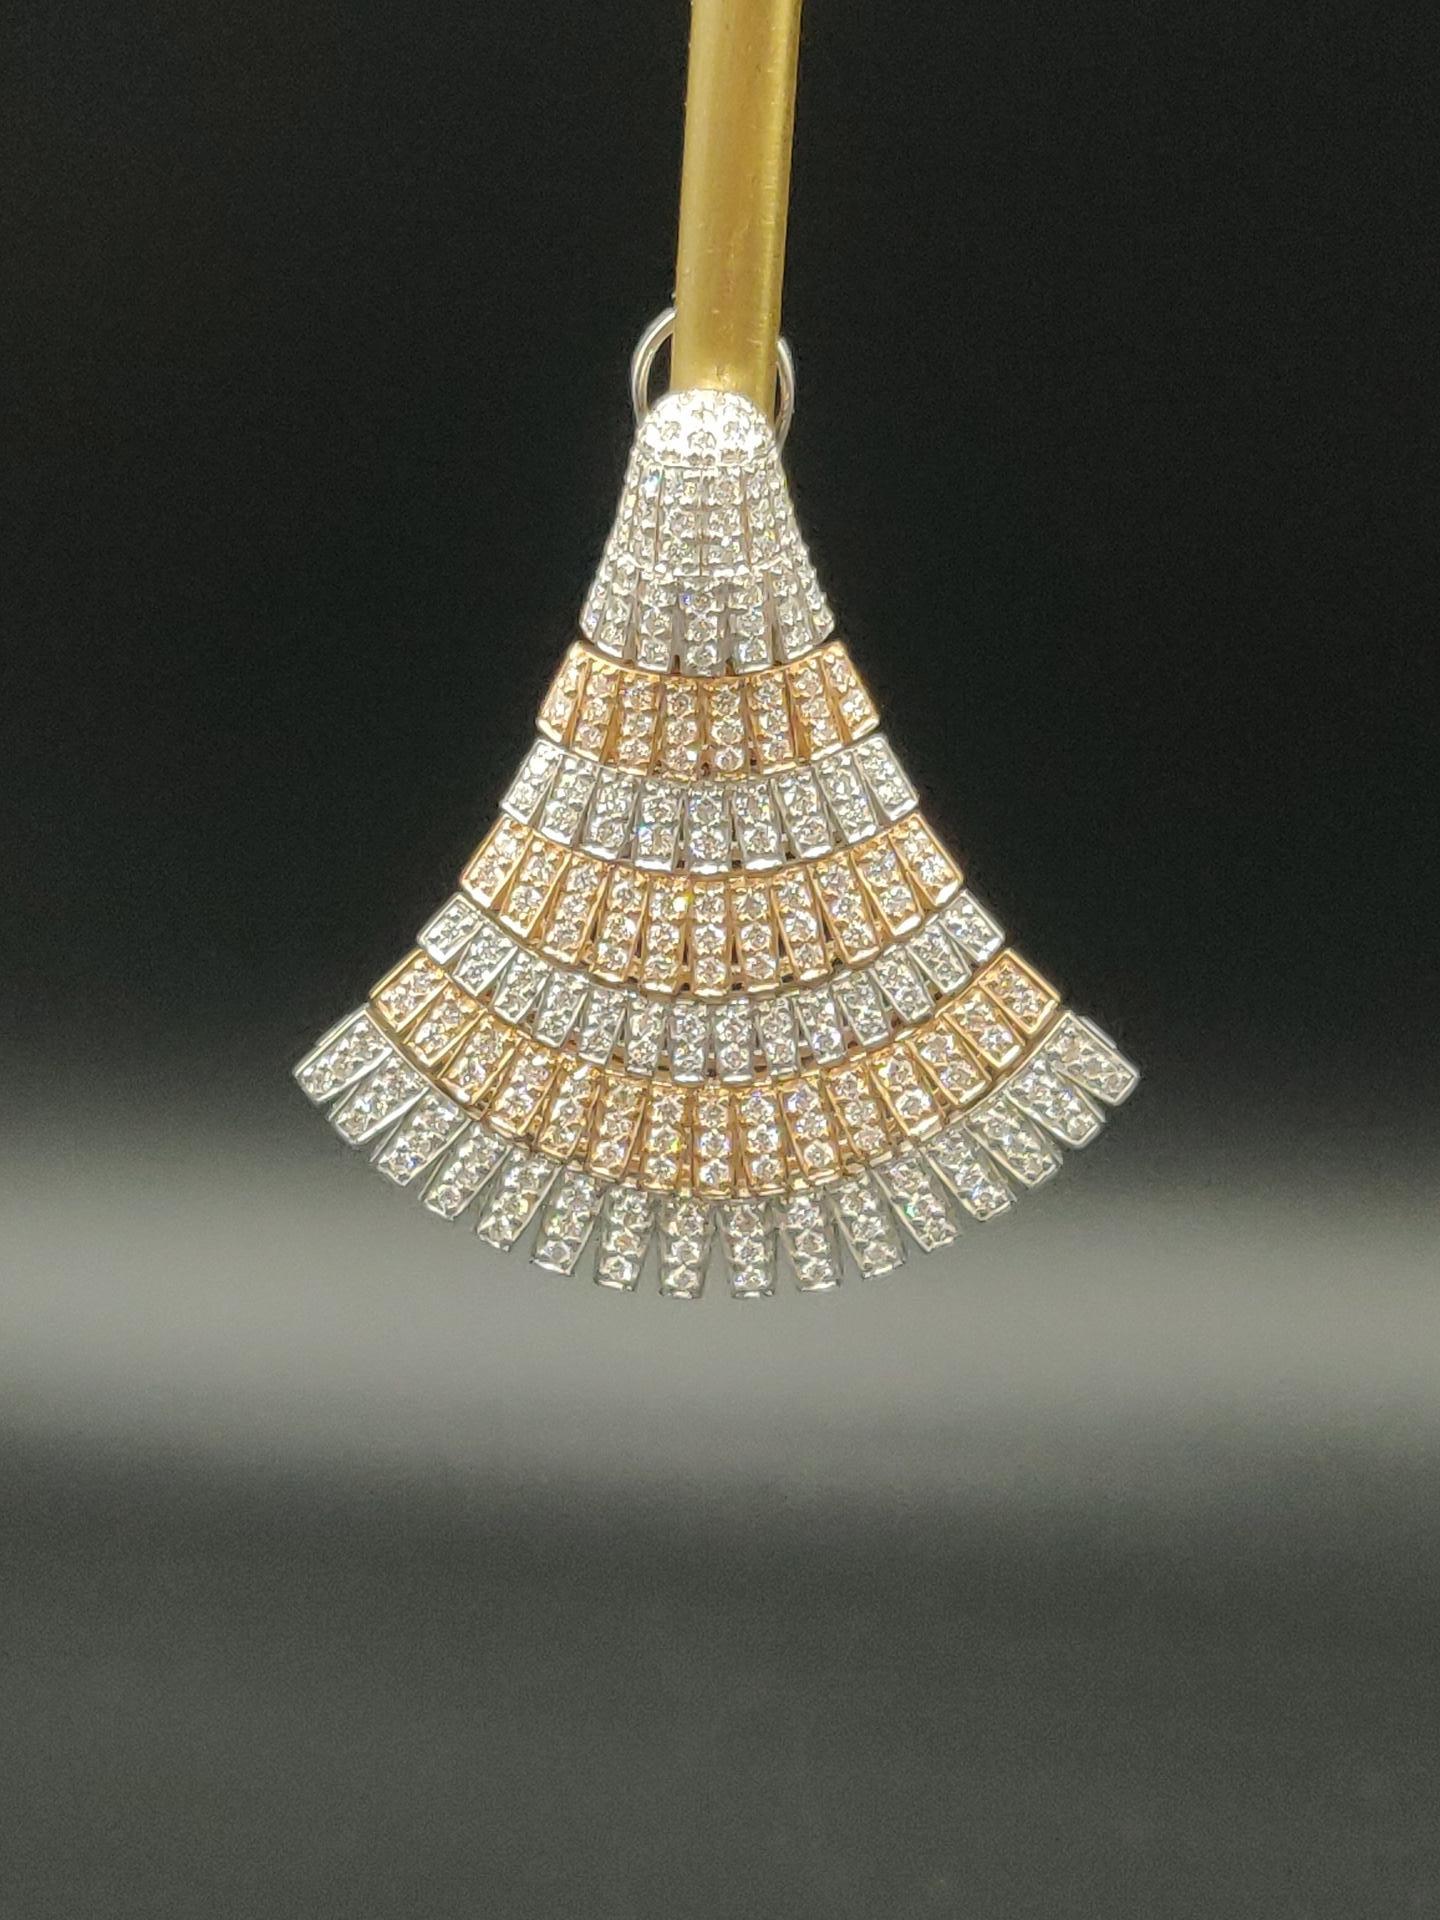 Brilliant Cut Diamond Ginkgo Chandelier Earrings in 18K White and Rose Gold